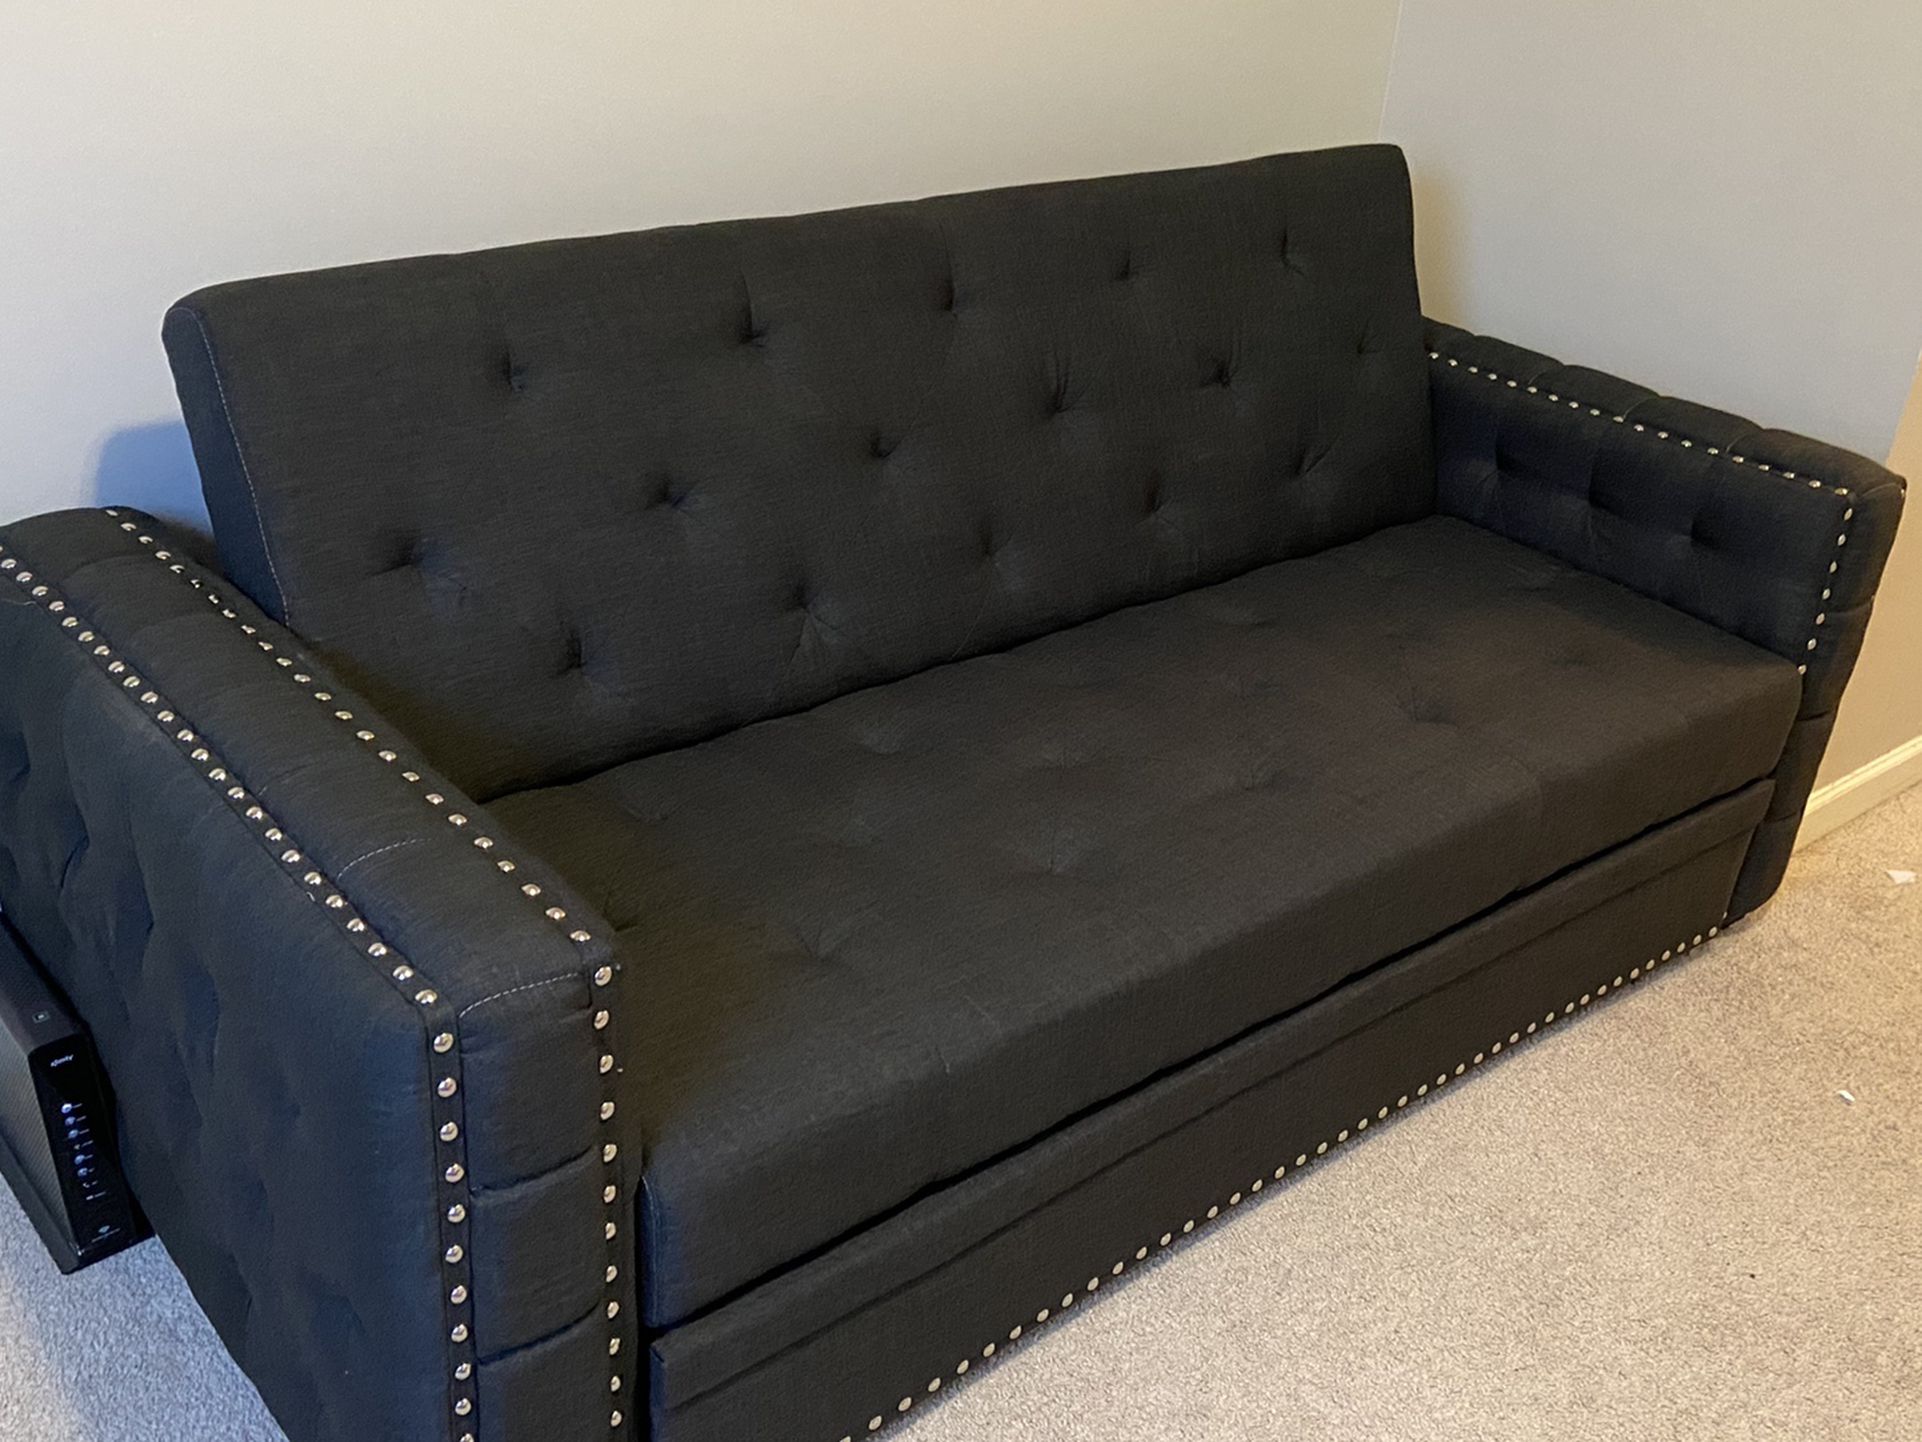 4 Way Futon Couch